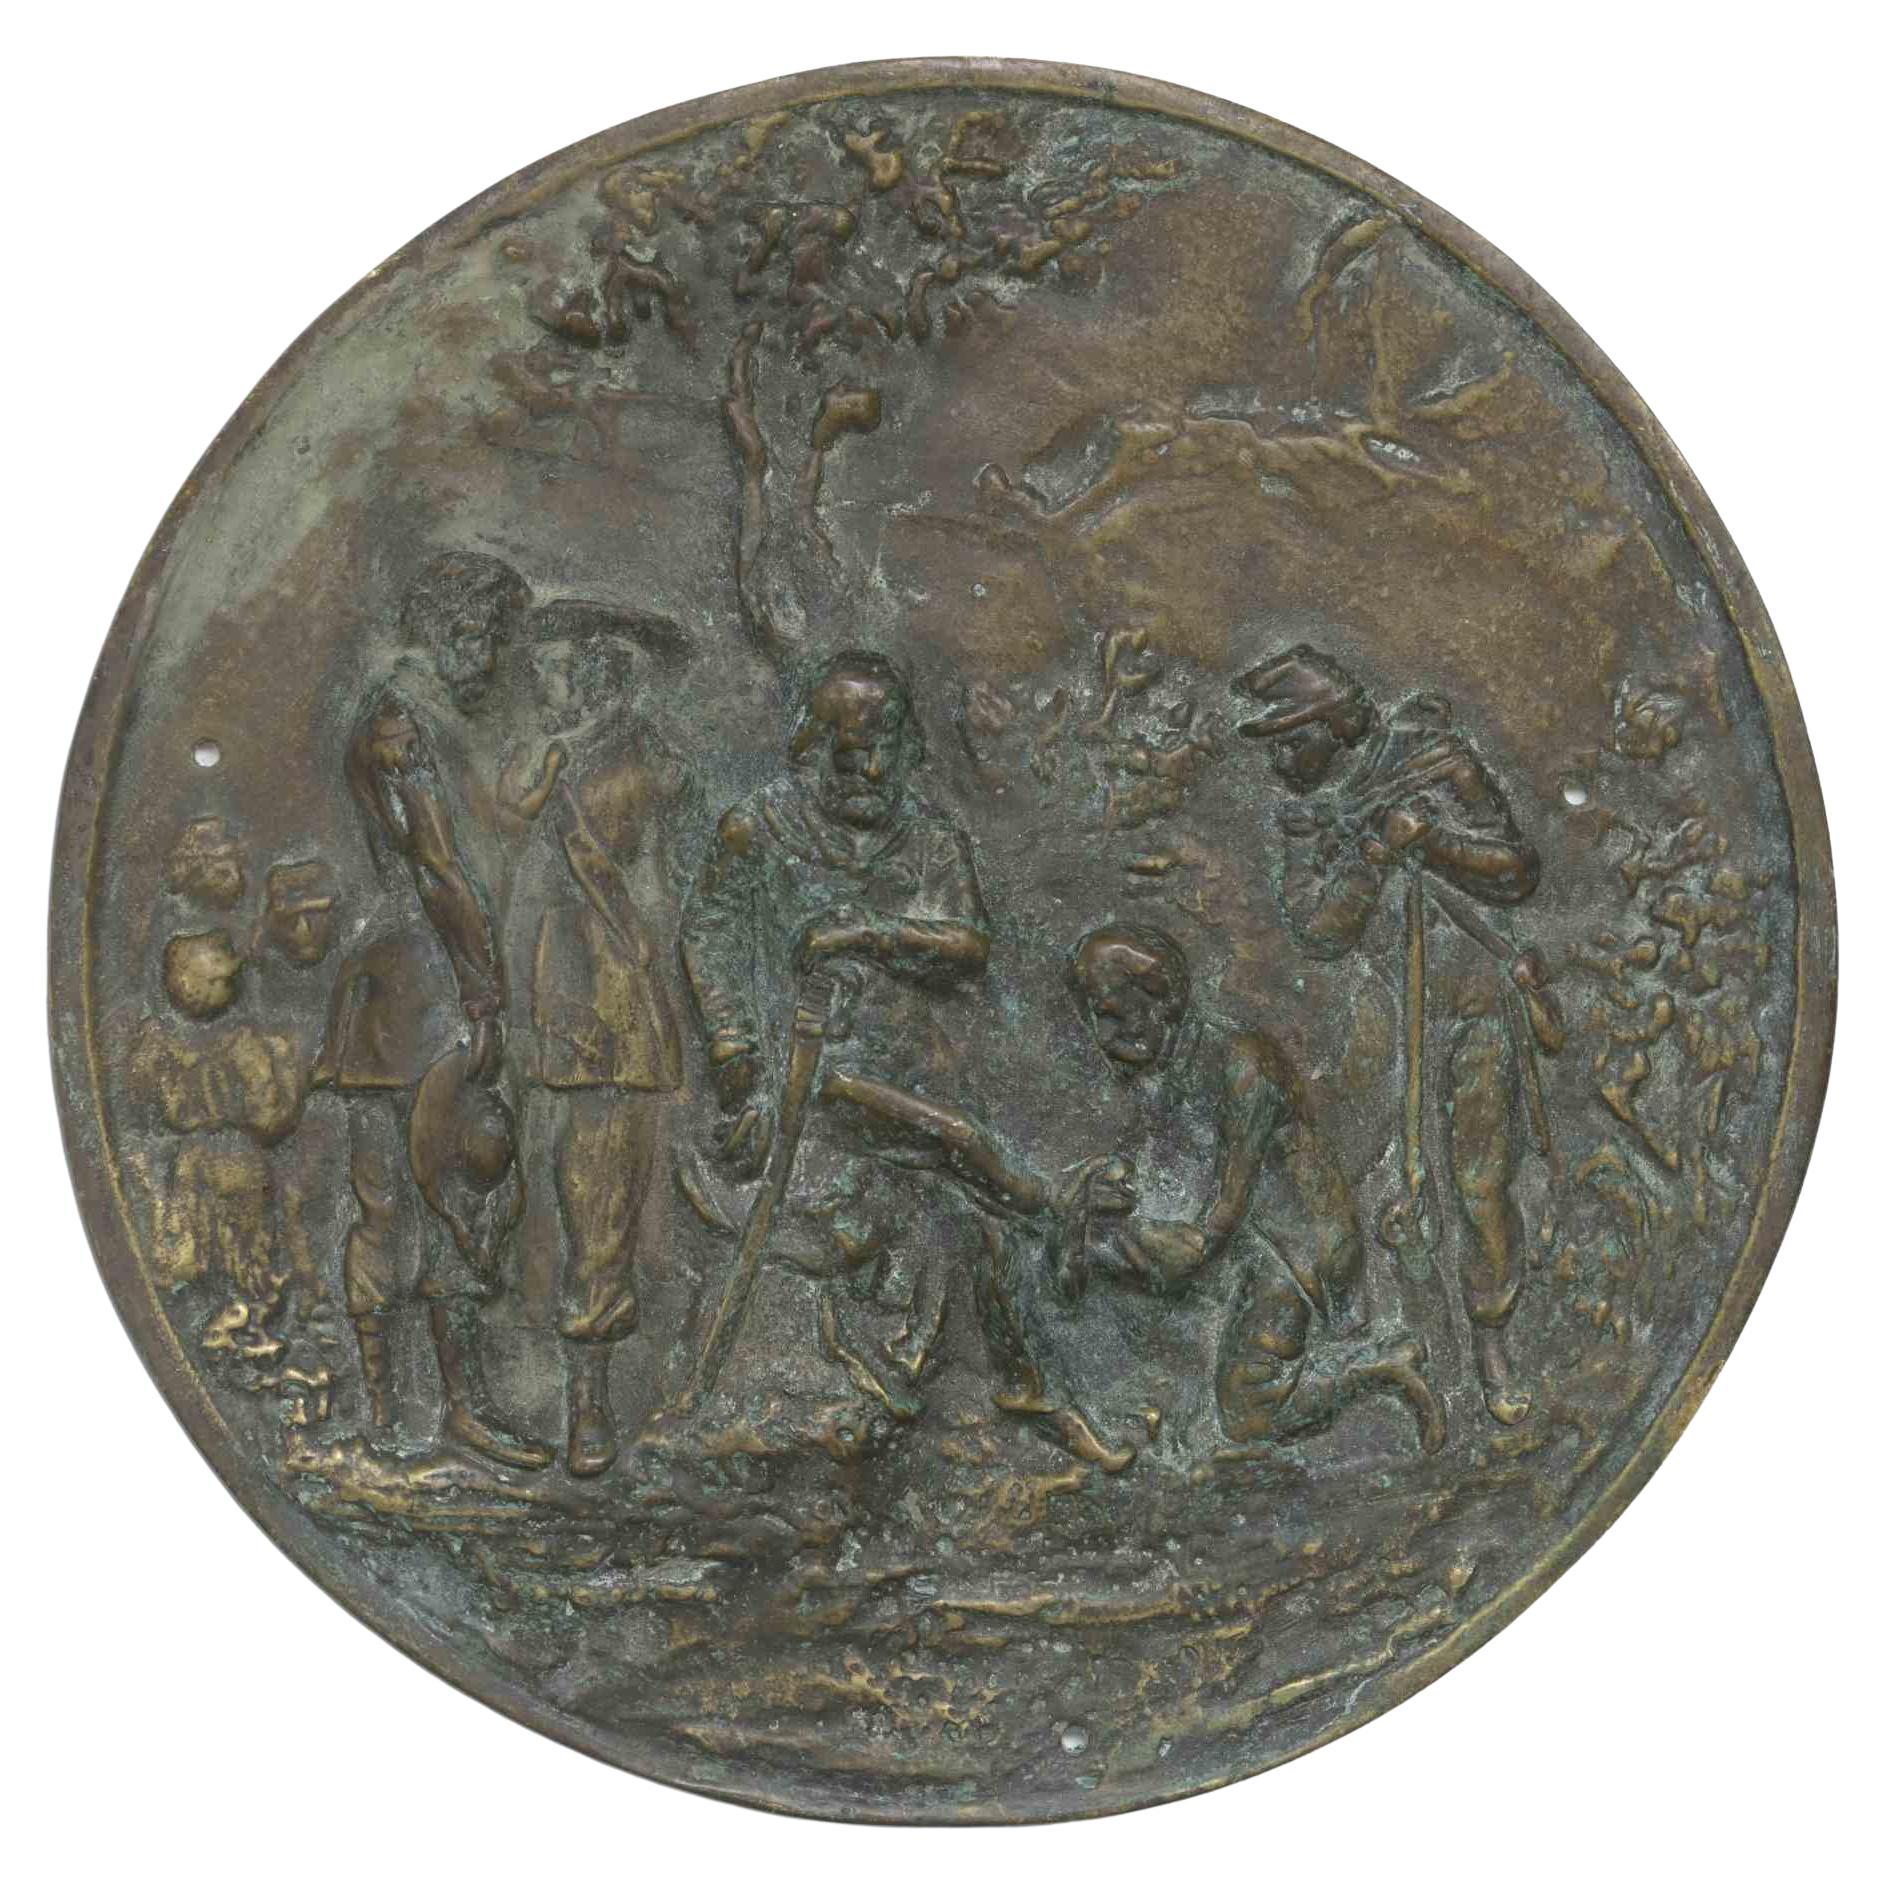 Garibaldi-Medaille, spätes 19. Jahrhundert im Angebot